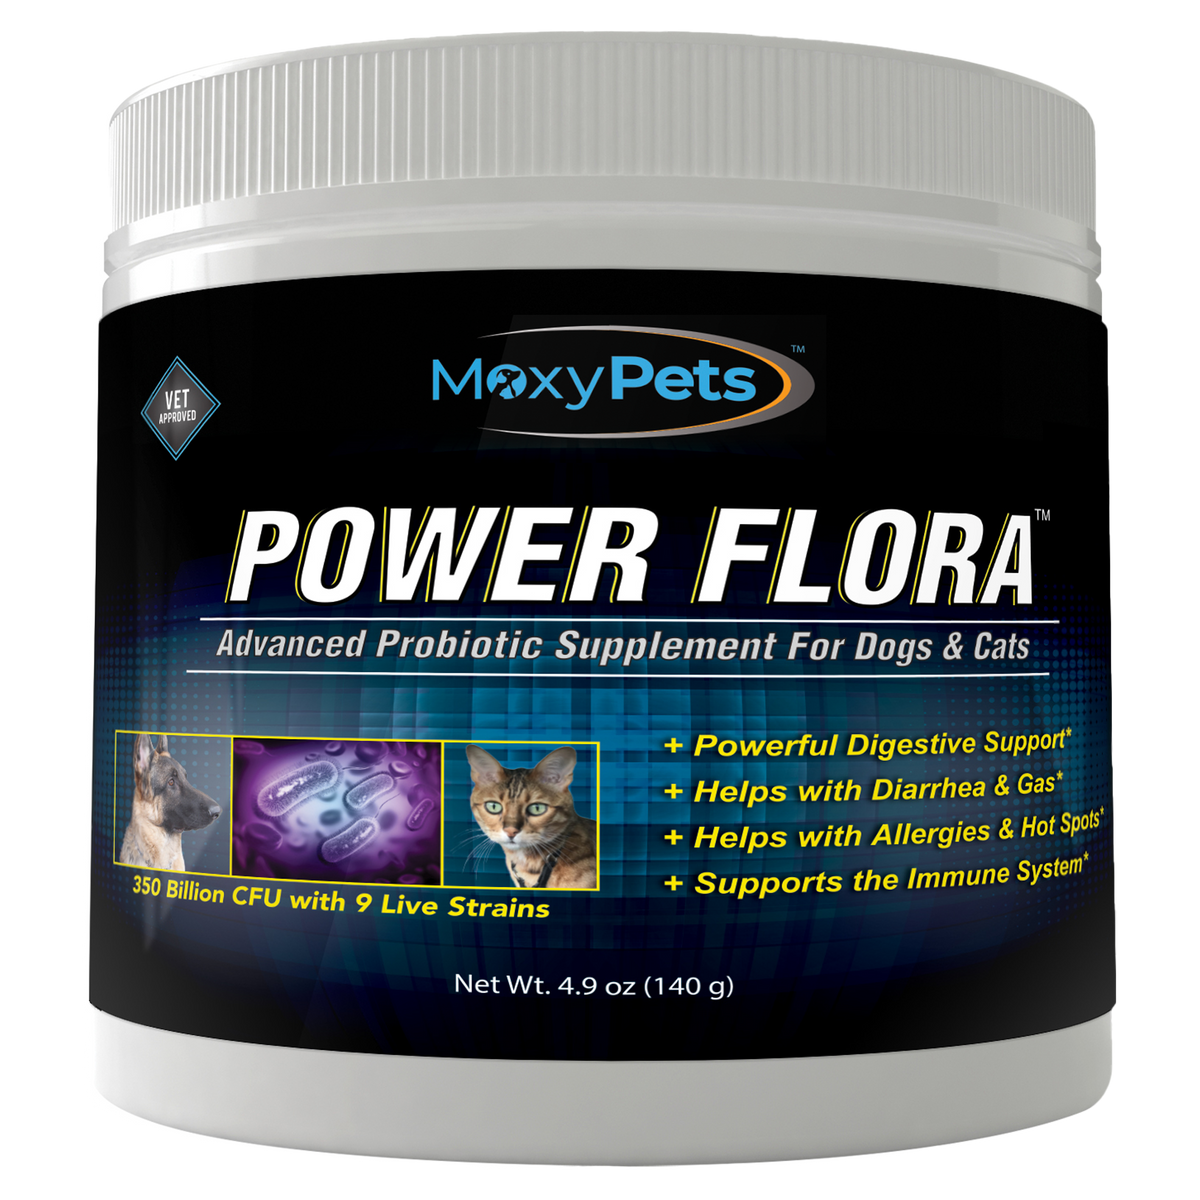 Moxypets Power Flora Bottle Front